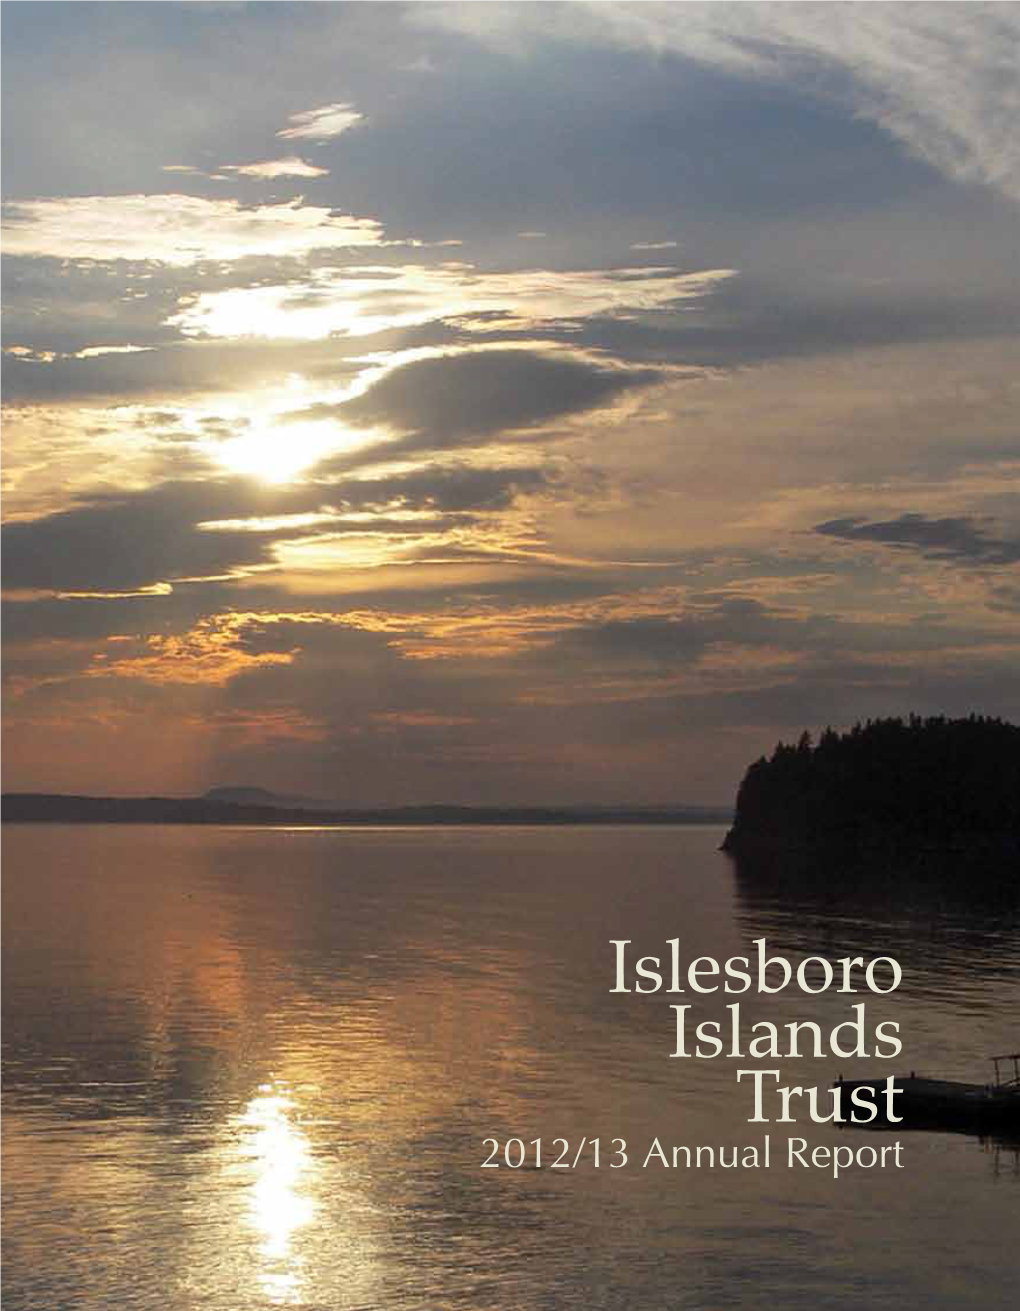 Islesboro Islands Trust’S Fundamental Purpose Is Conservation